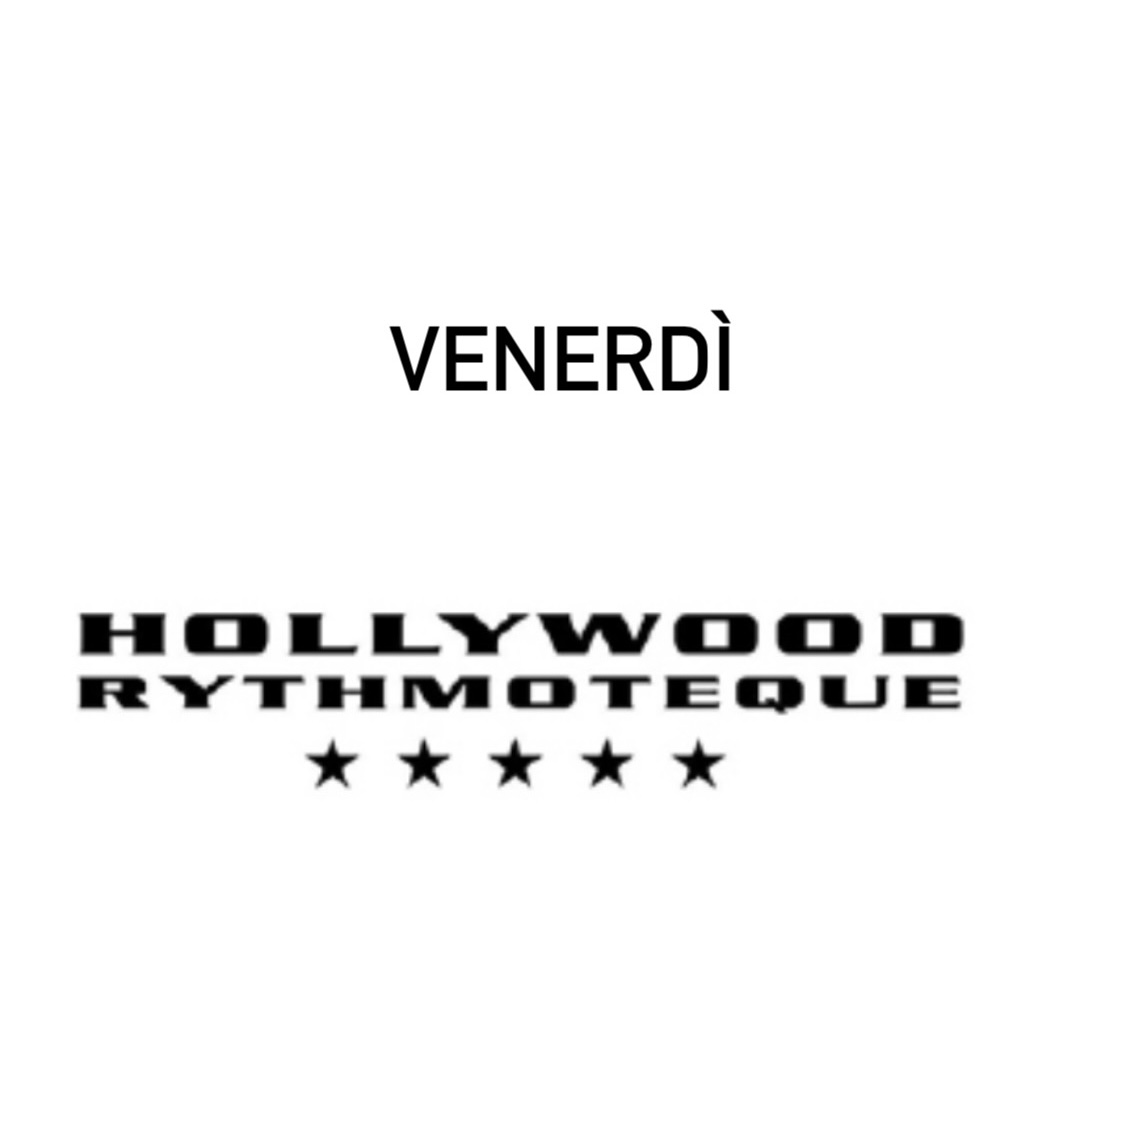 venerdi hollywood milano - info e prenotazioni 3282345620 - discoteca hollywood milano